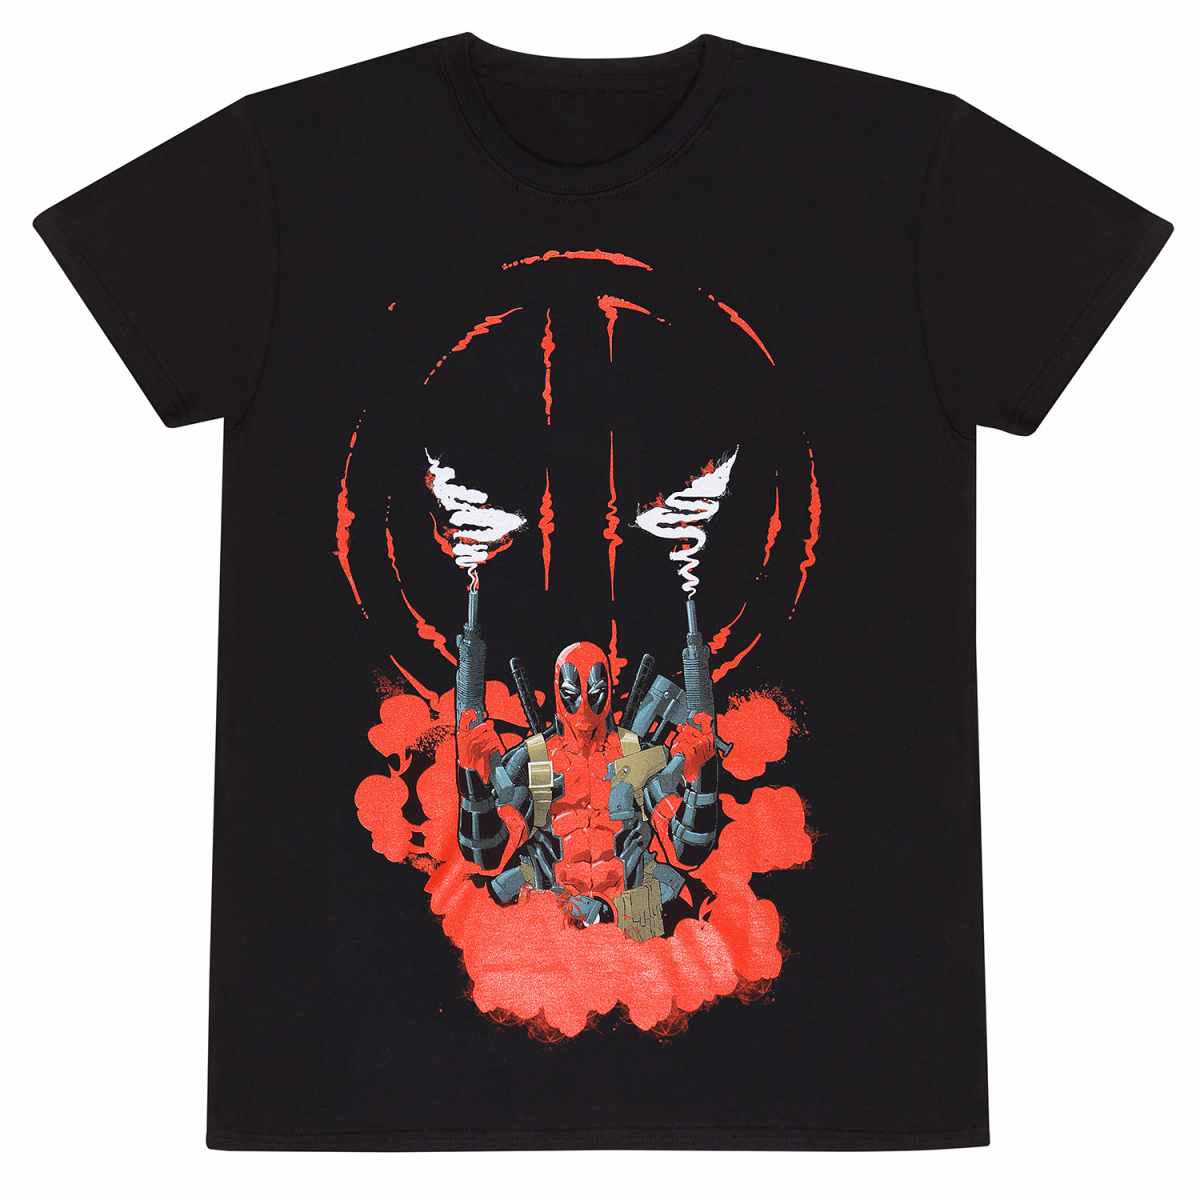 Marvel Comics Deadpool - Smoking T-Shirt - Men's/Unisex